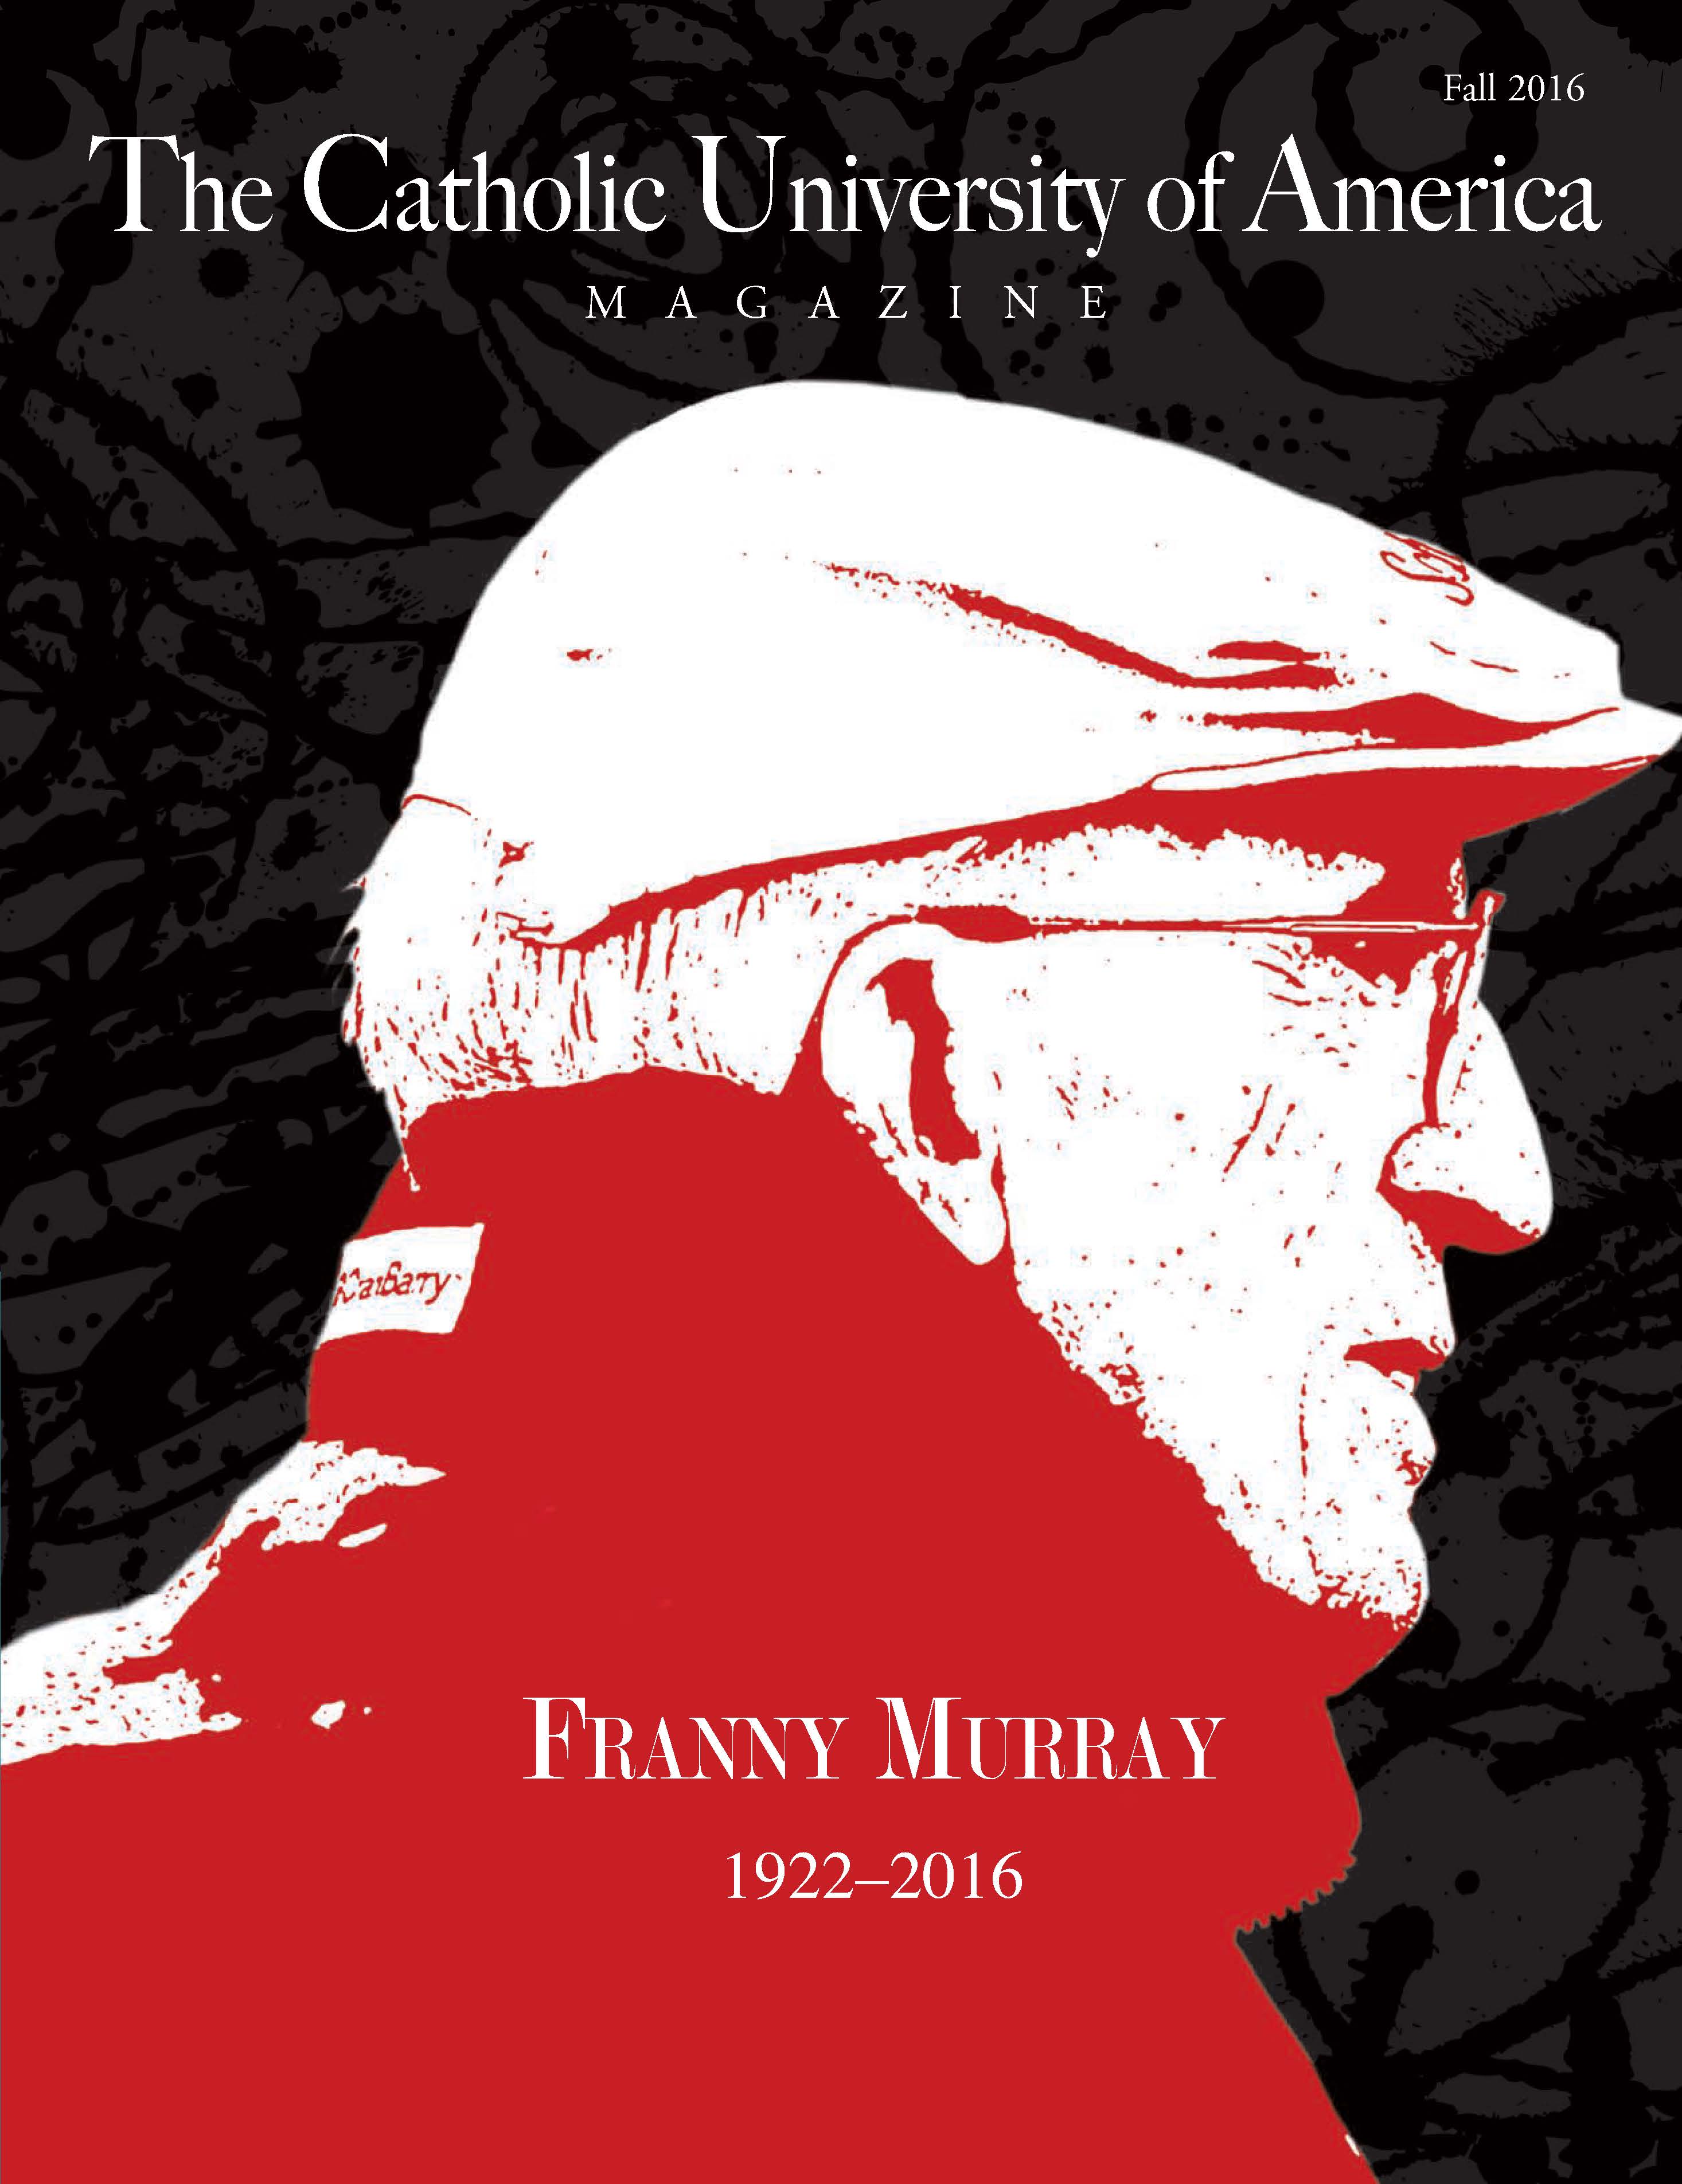 Cover of CatholicU Magazine showing Franny Murray